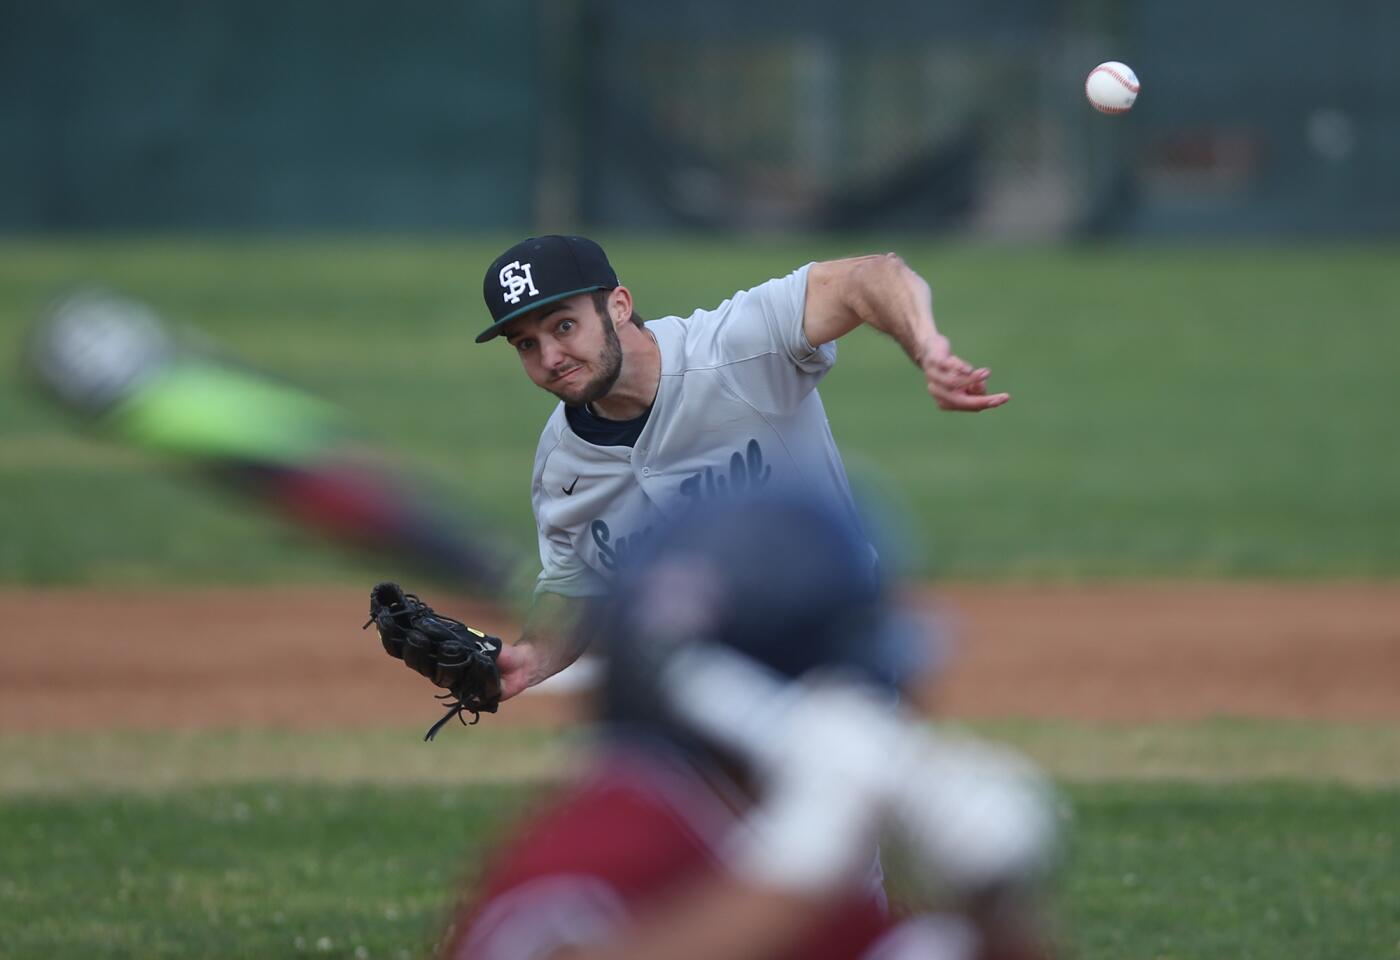 Photo Gallery: Sage Hill vs. St. Margaret’s in baseball